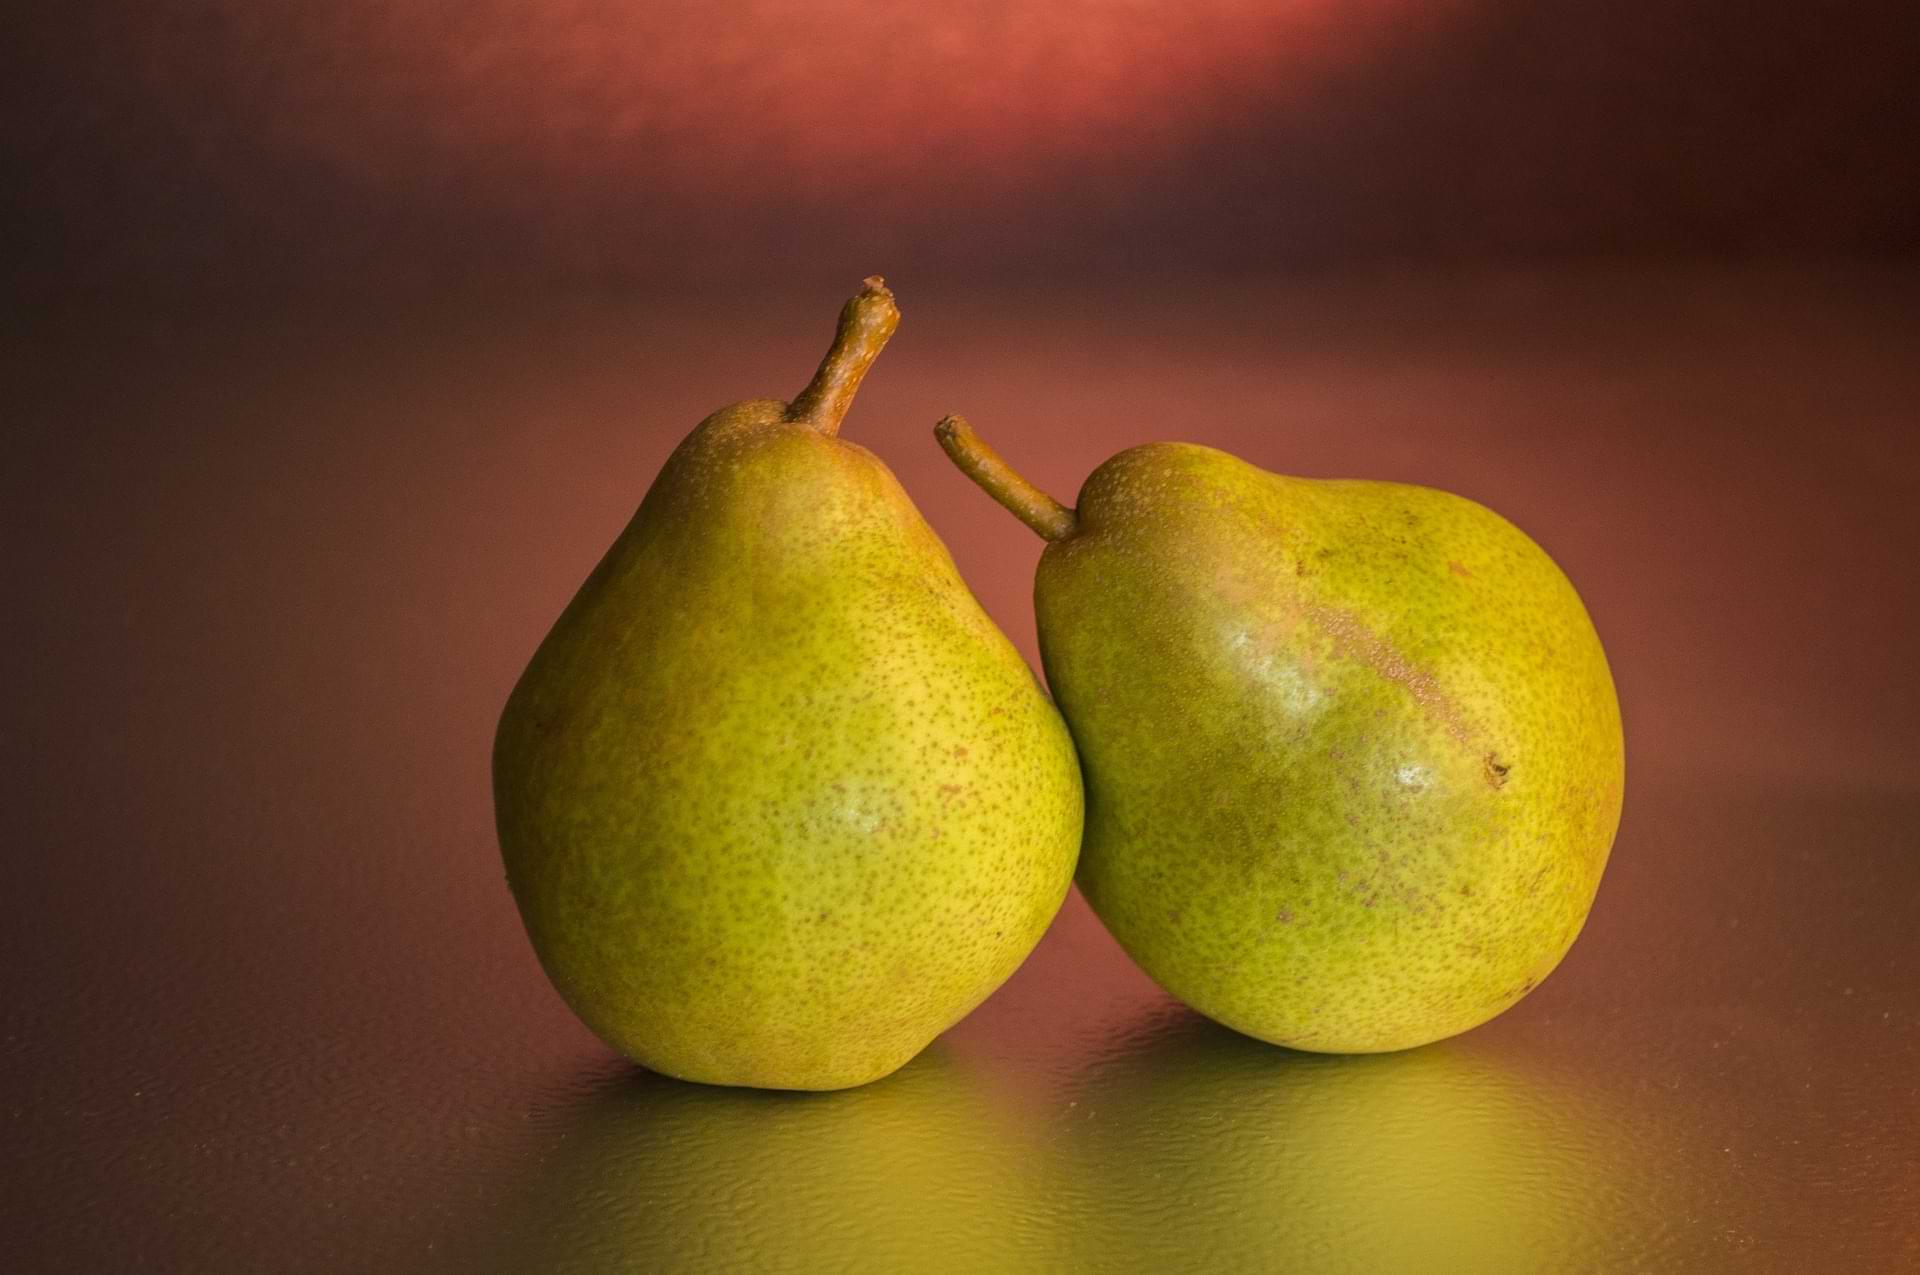 Imagen de 2 peras frescas sobre fondo borroso